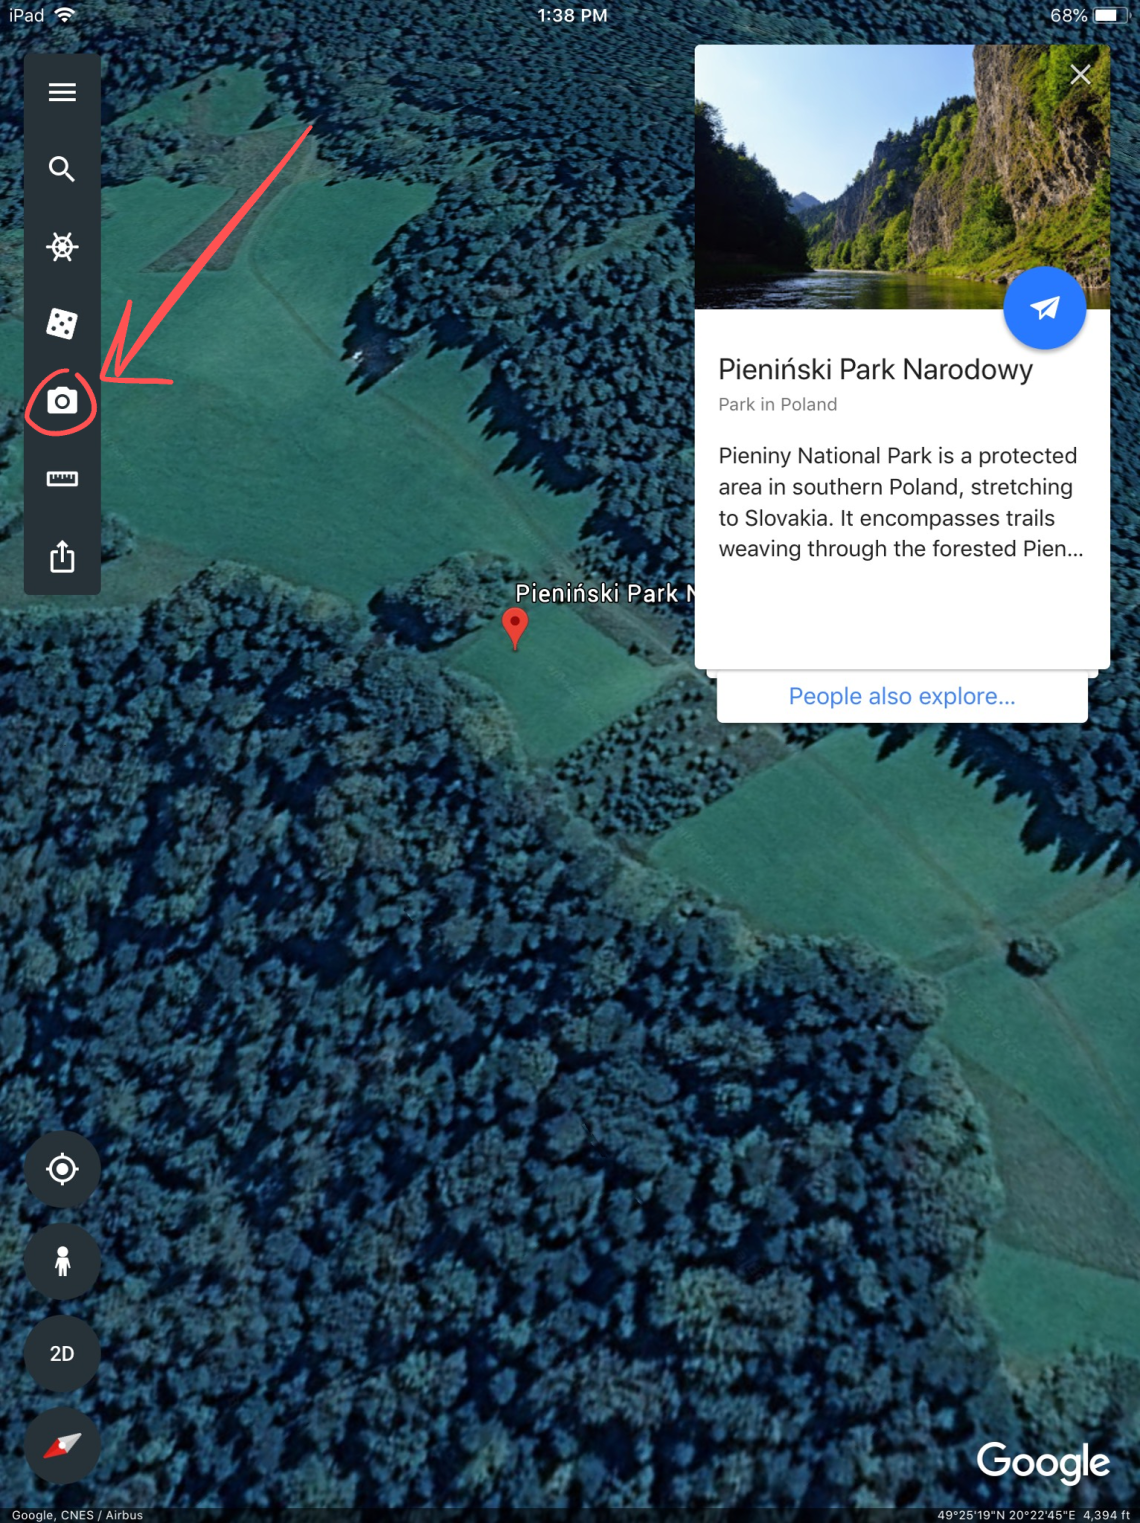 The camera icon in the Google Earth iPad app.